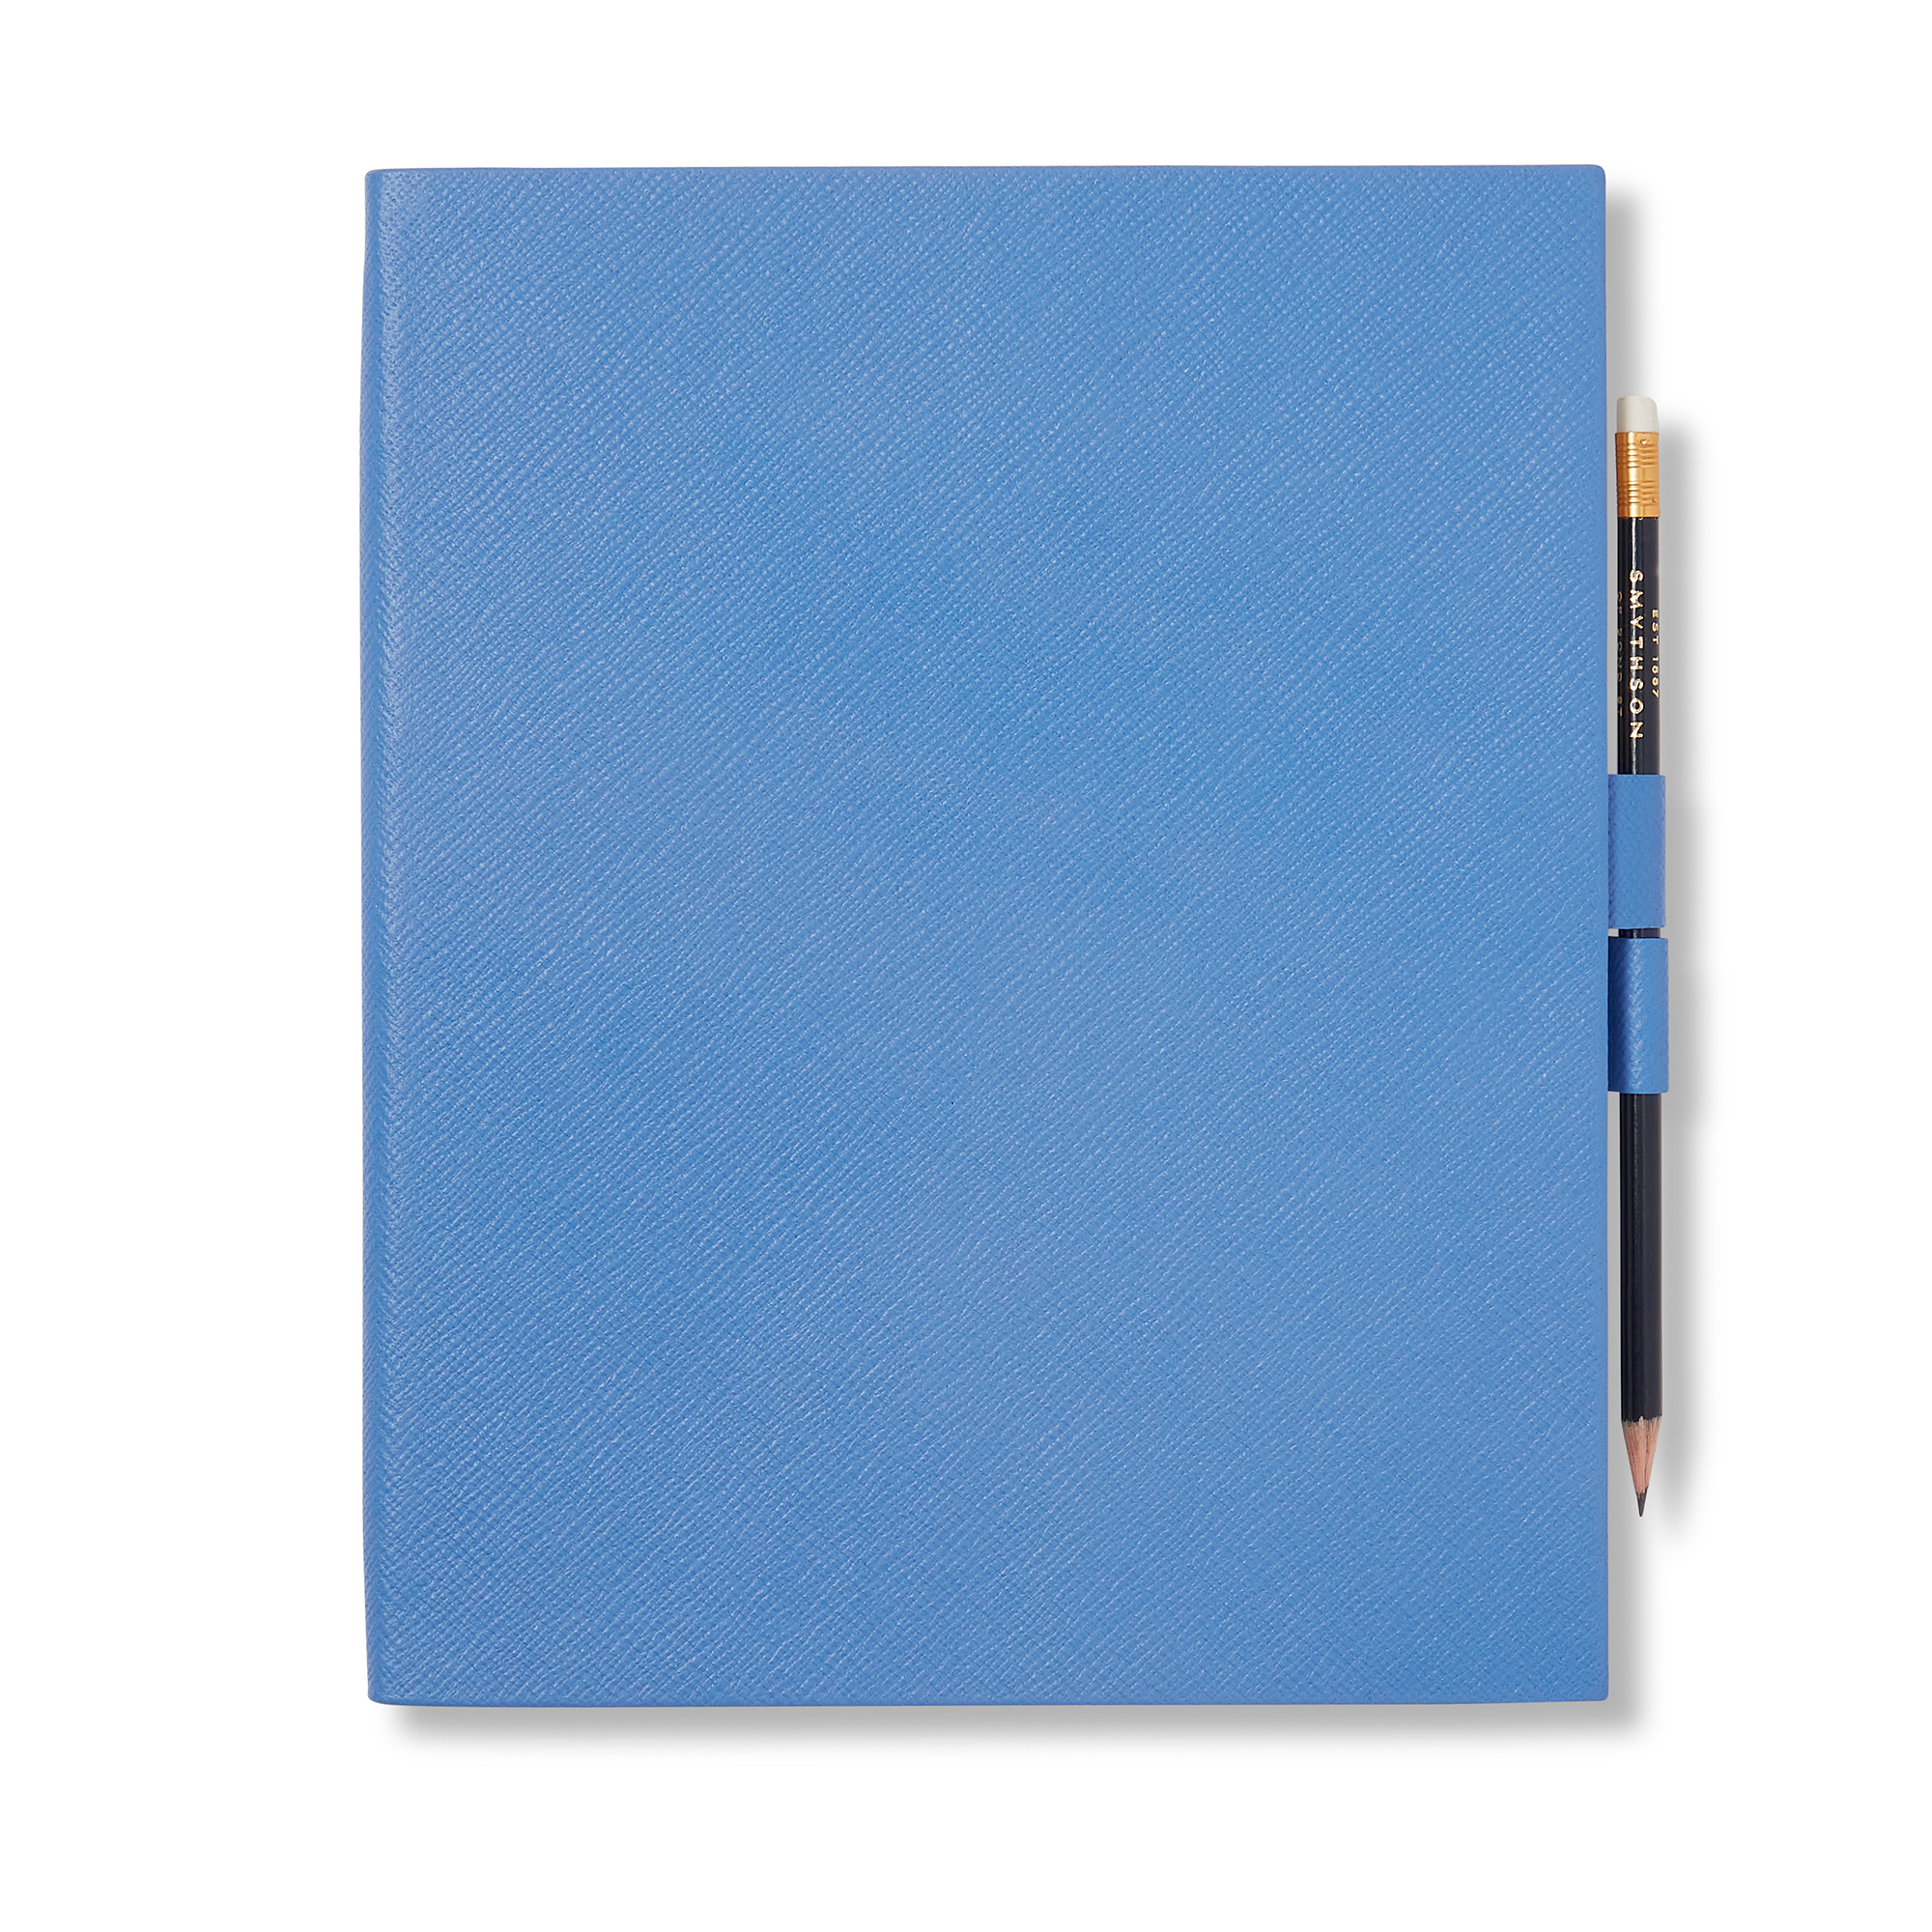 Smythson Notebook - Portobello Notebook In Panama Agenda Diary